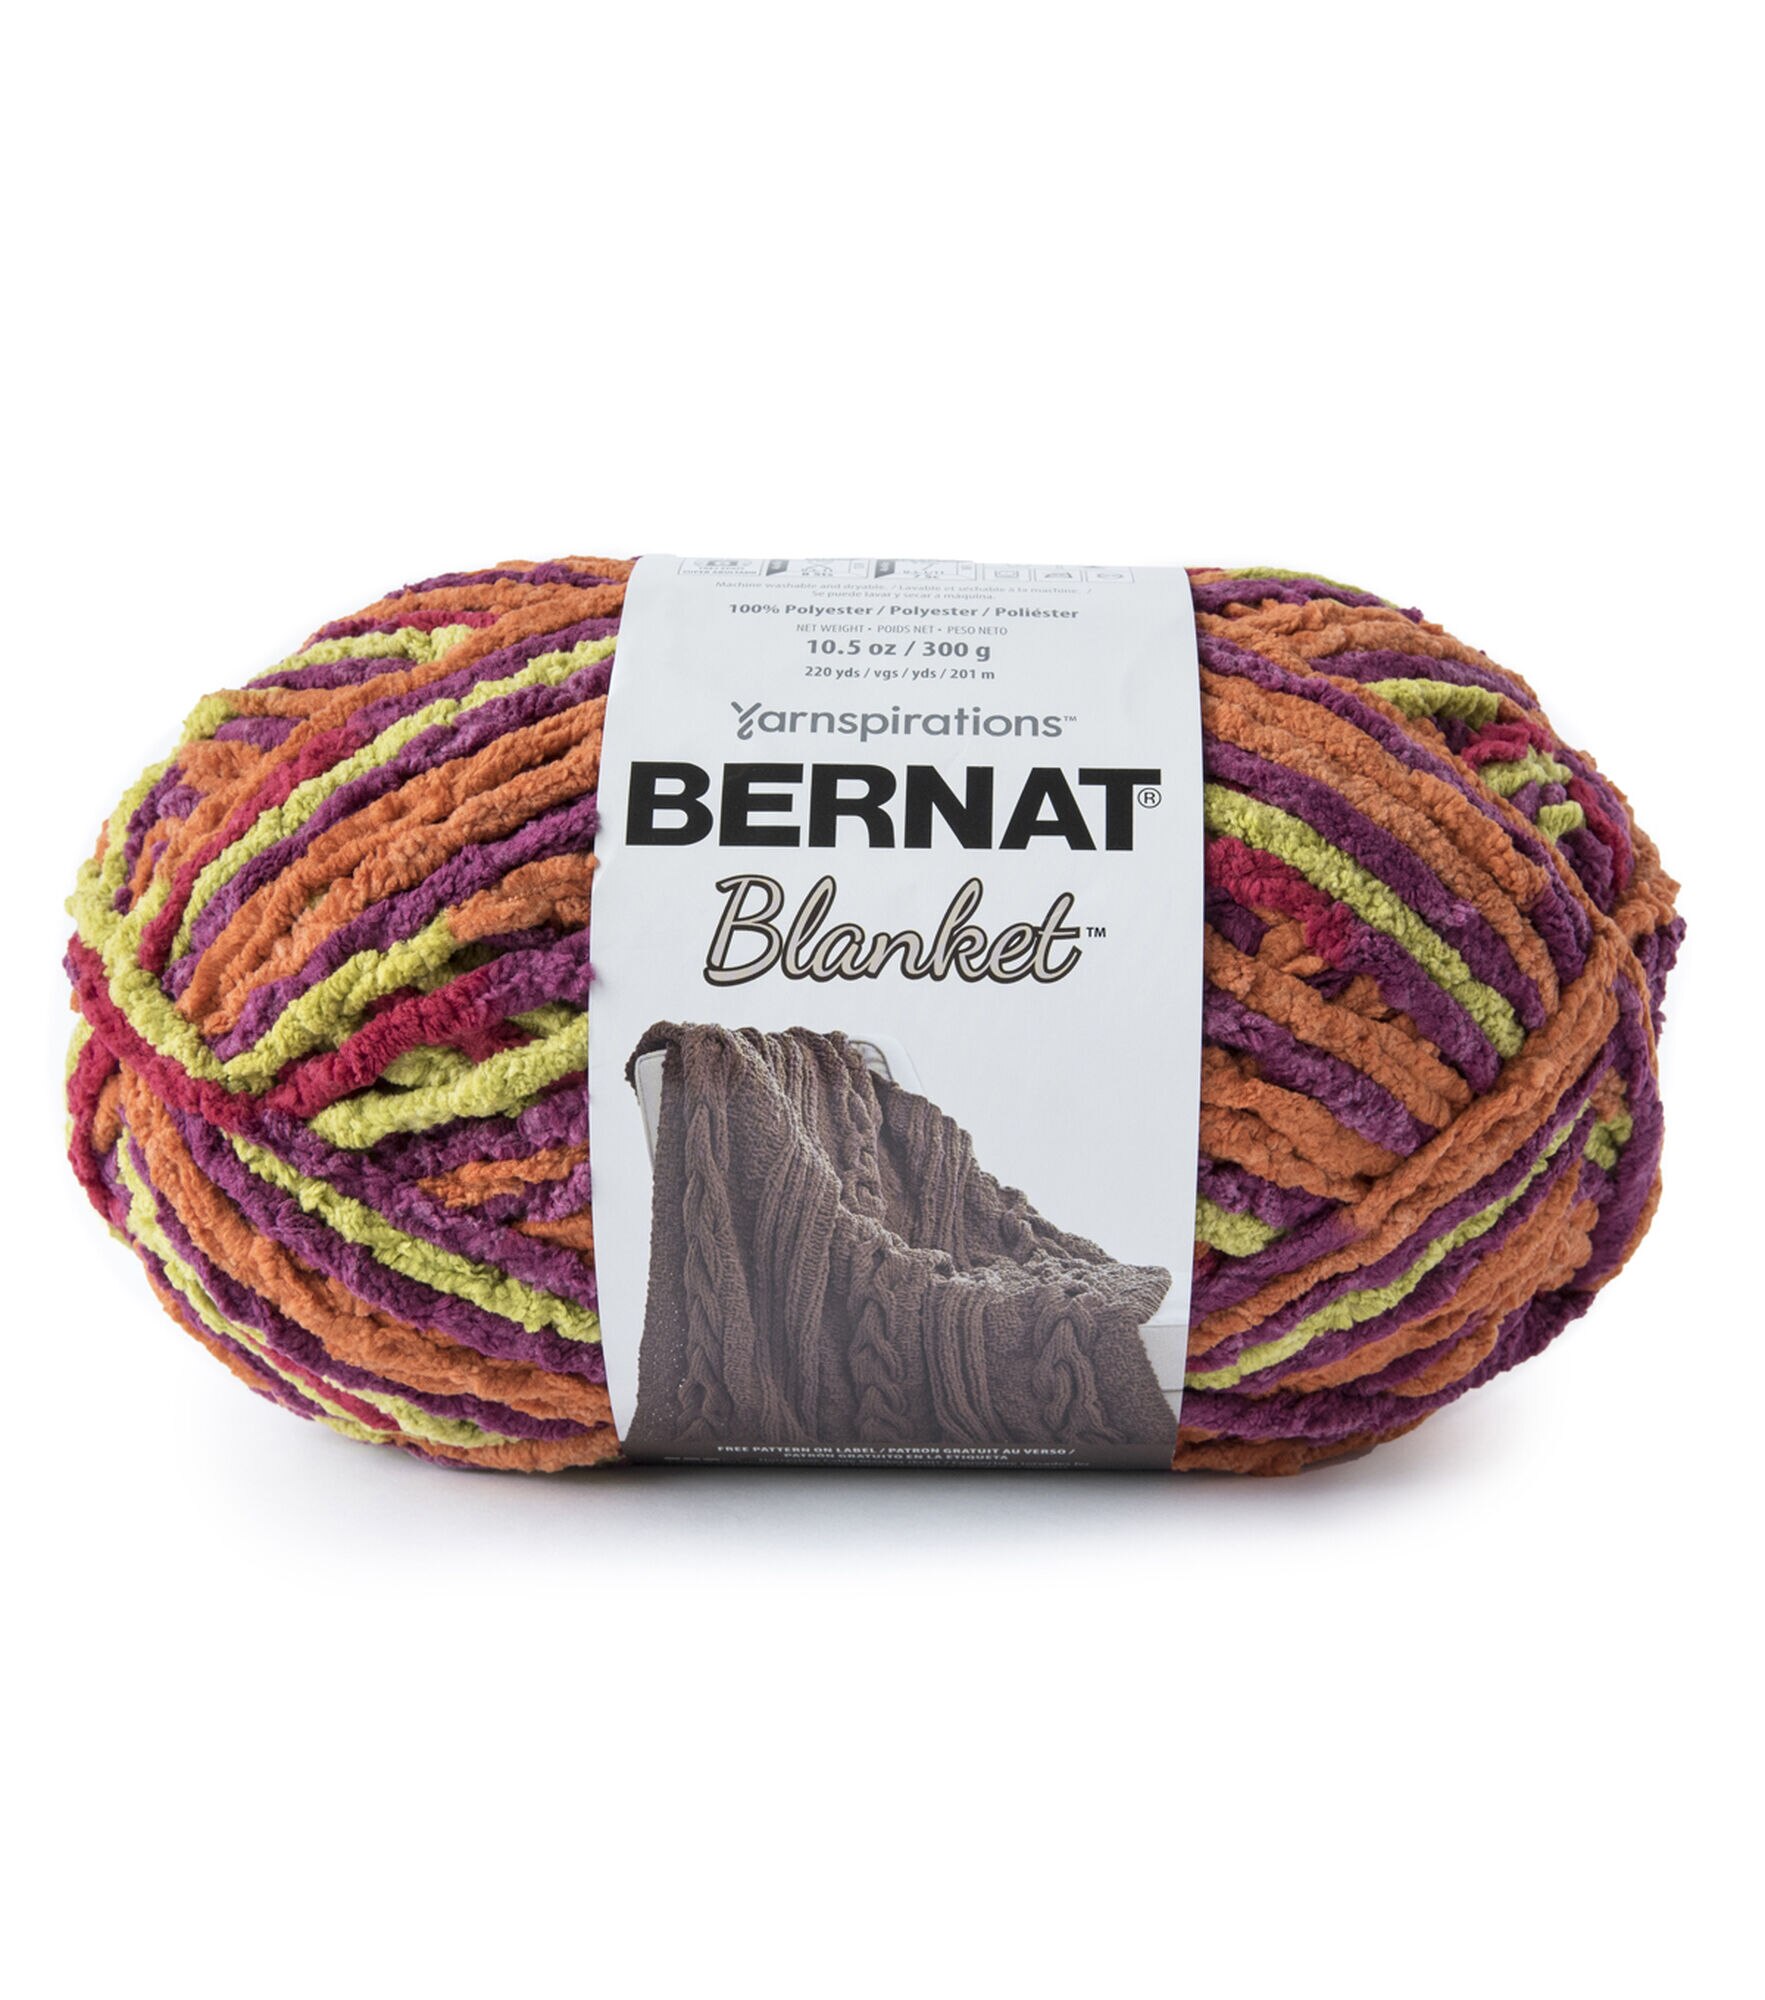 Bernat super value Burgundy yarn